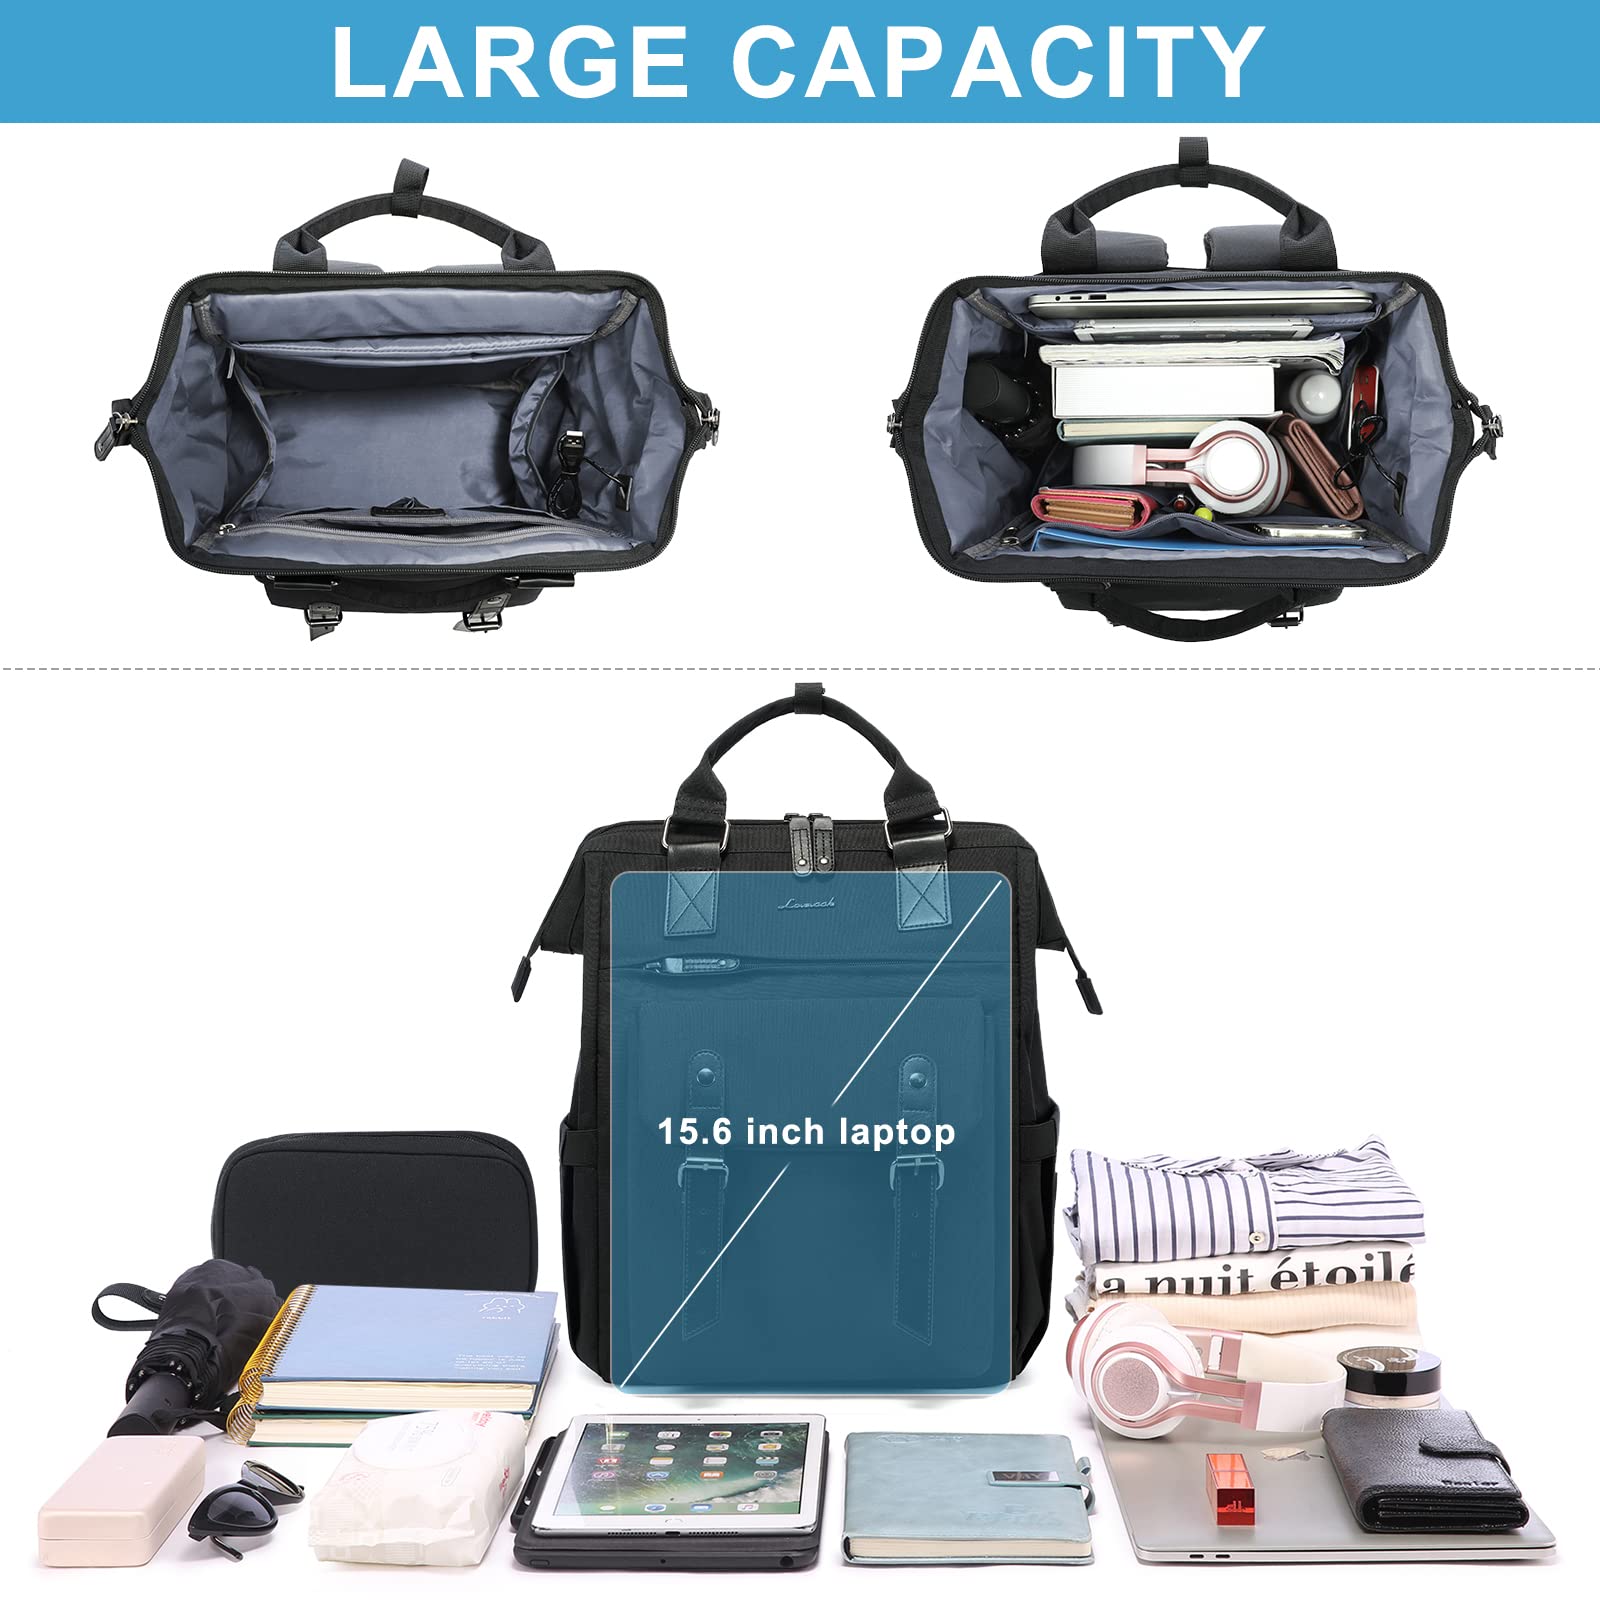 LOVEVOOK Laptop Backpack for Women, Teacher Nurse Bag Work Travel Computer Backpacks Purse,Water Resistant Daypack with USB Charging Port, 15.6 inch Black